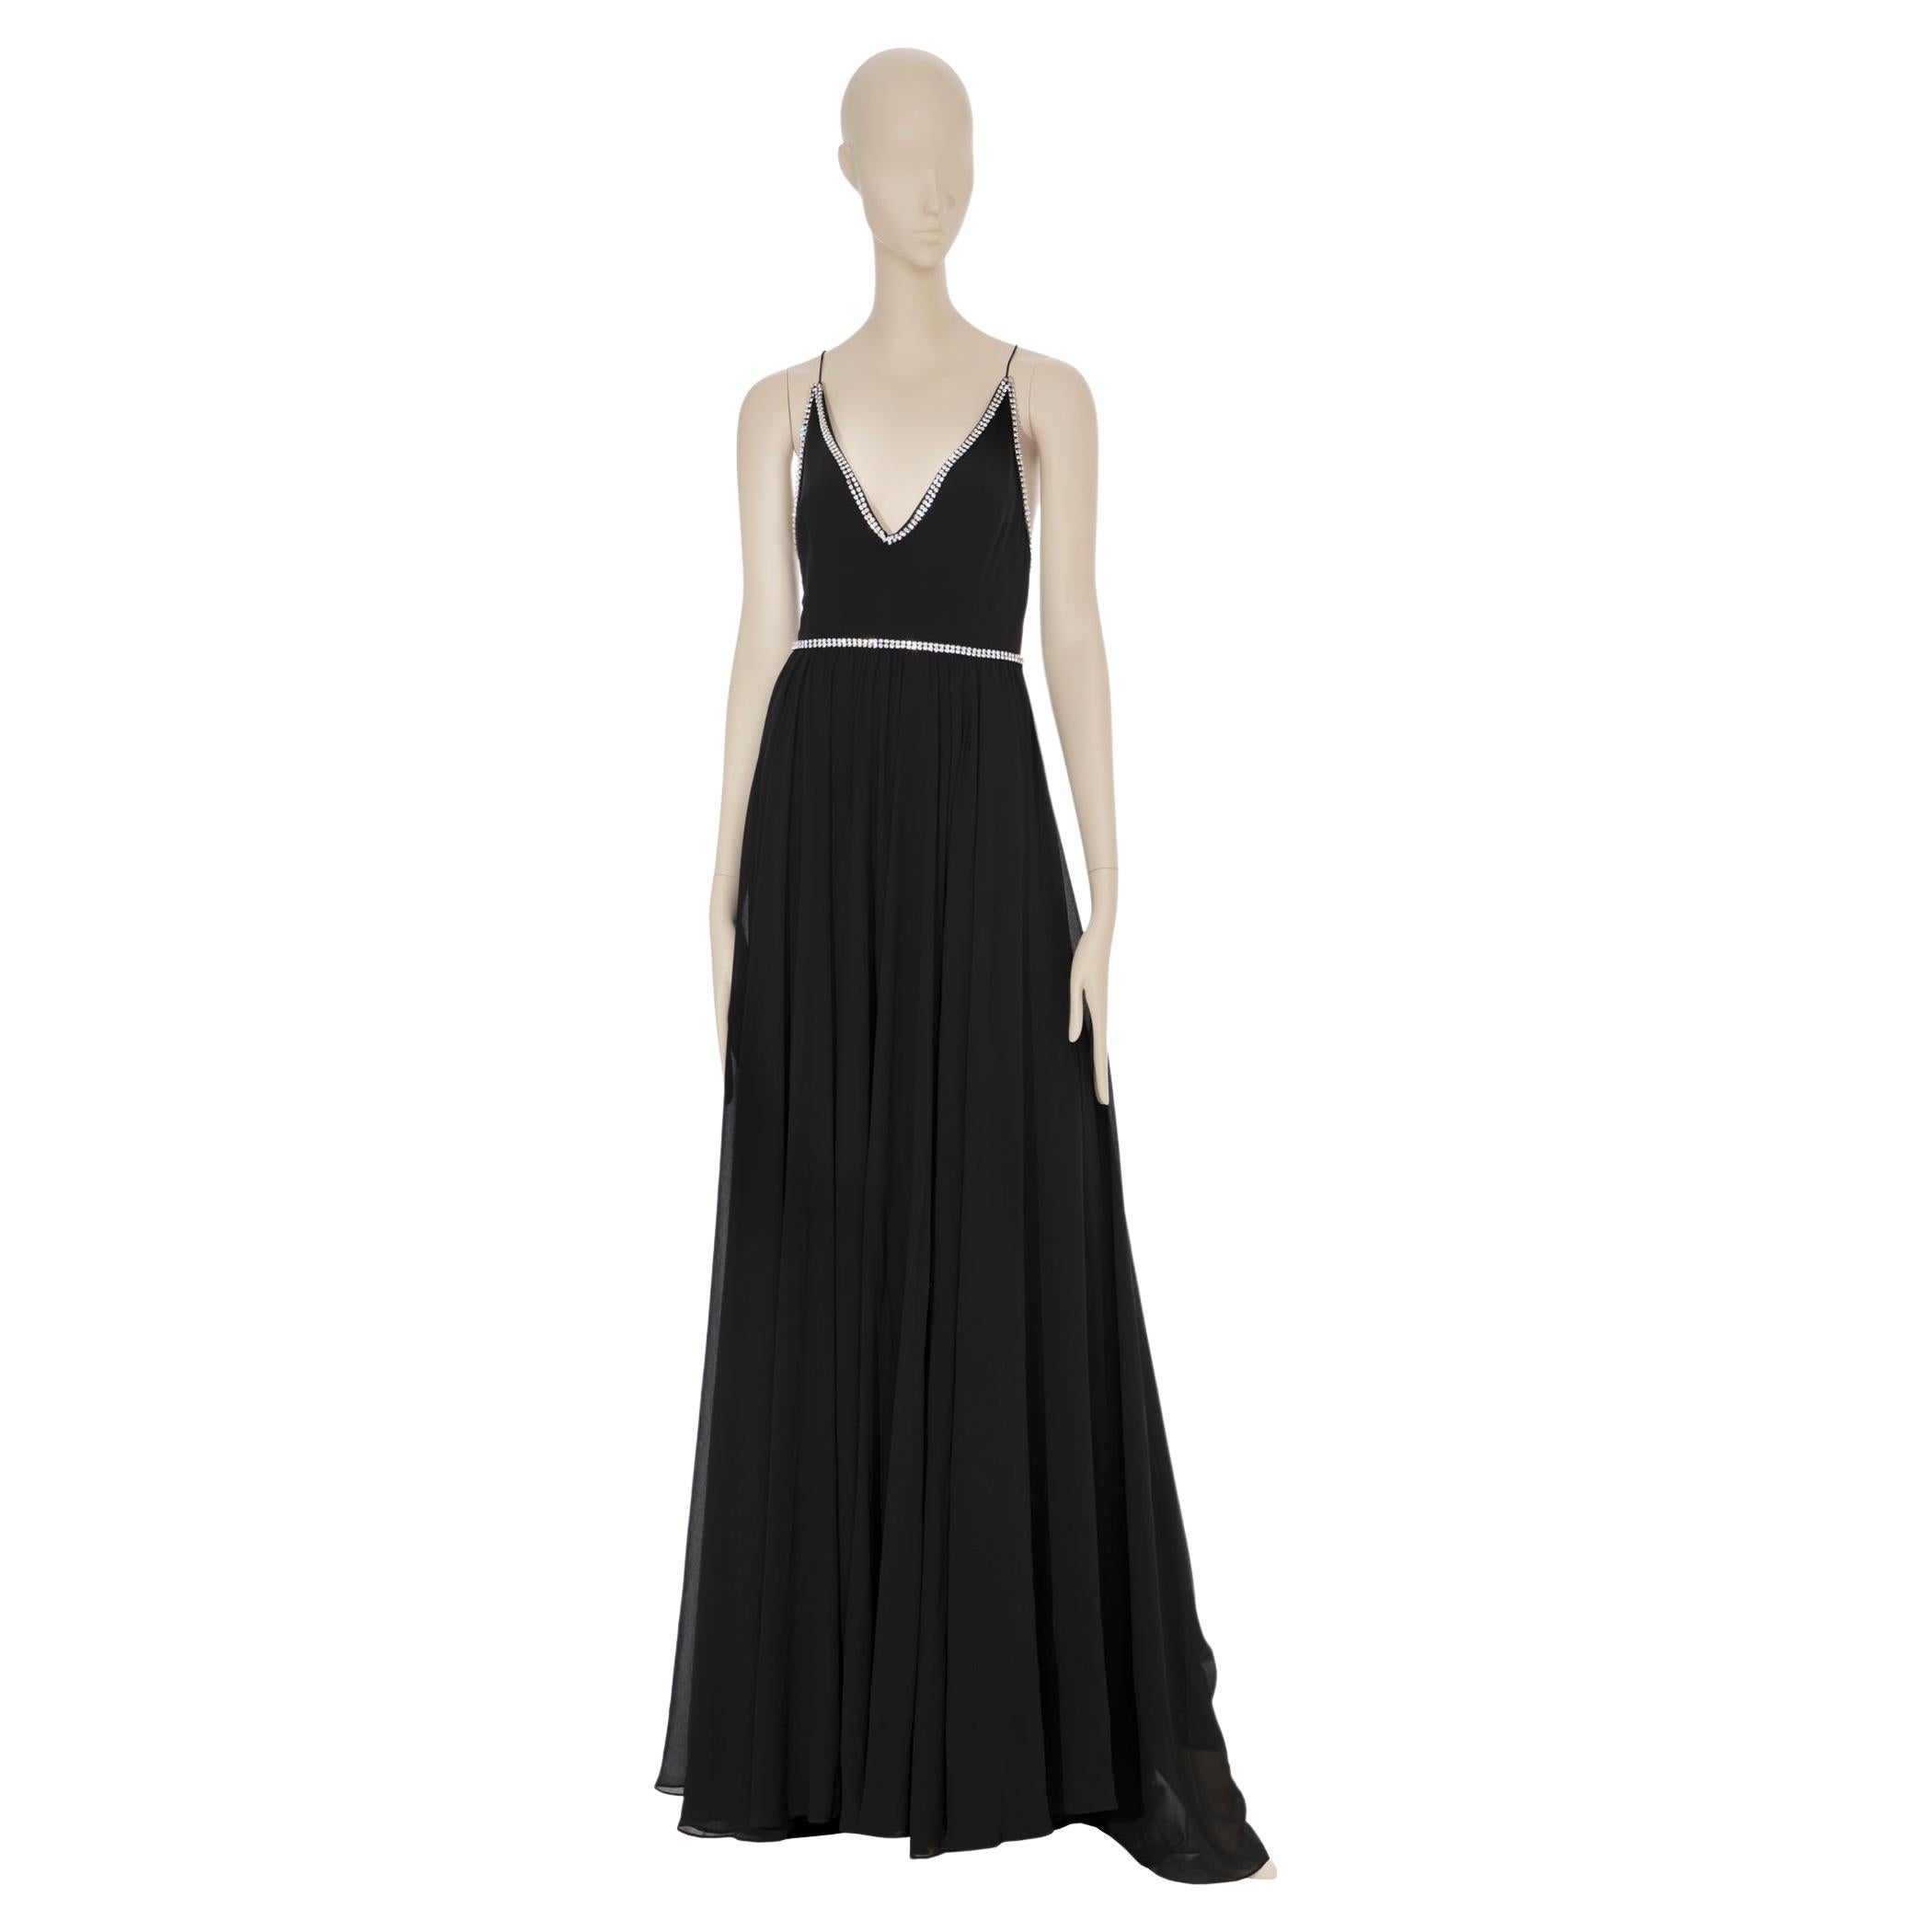 Saint Laurent Black Evening Gown With Crystal Details 38 FR For Sale